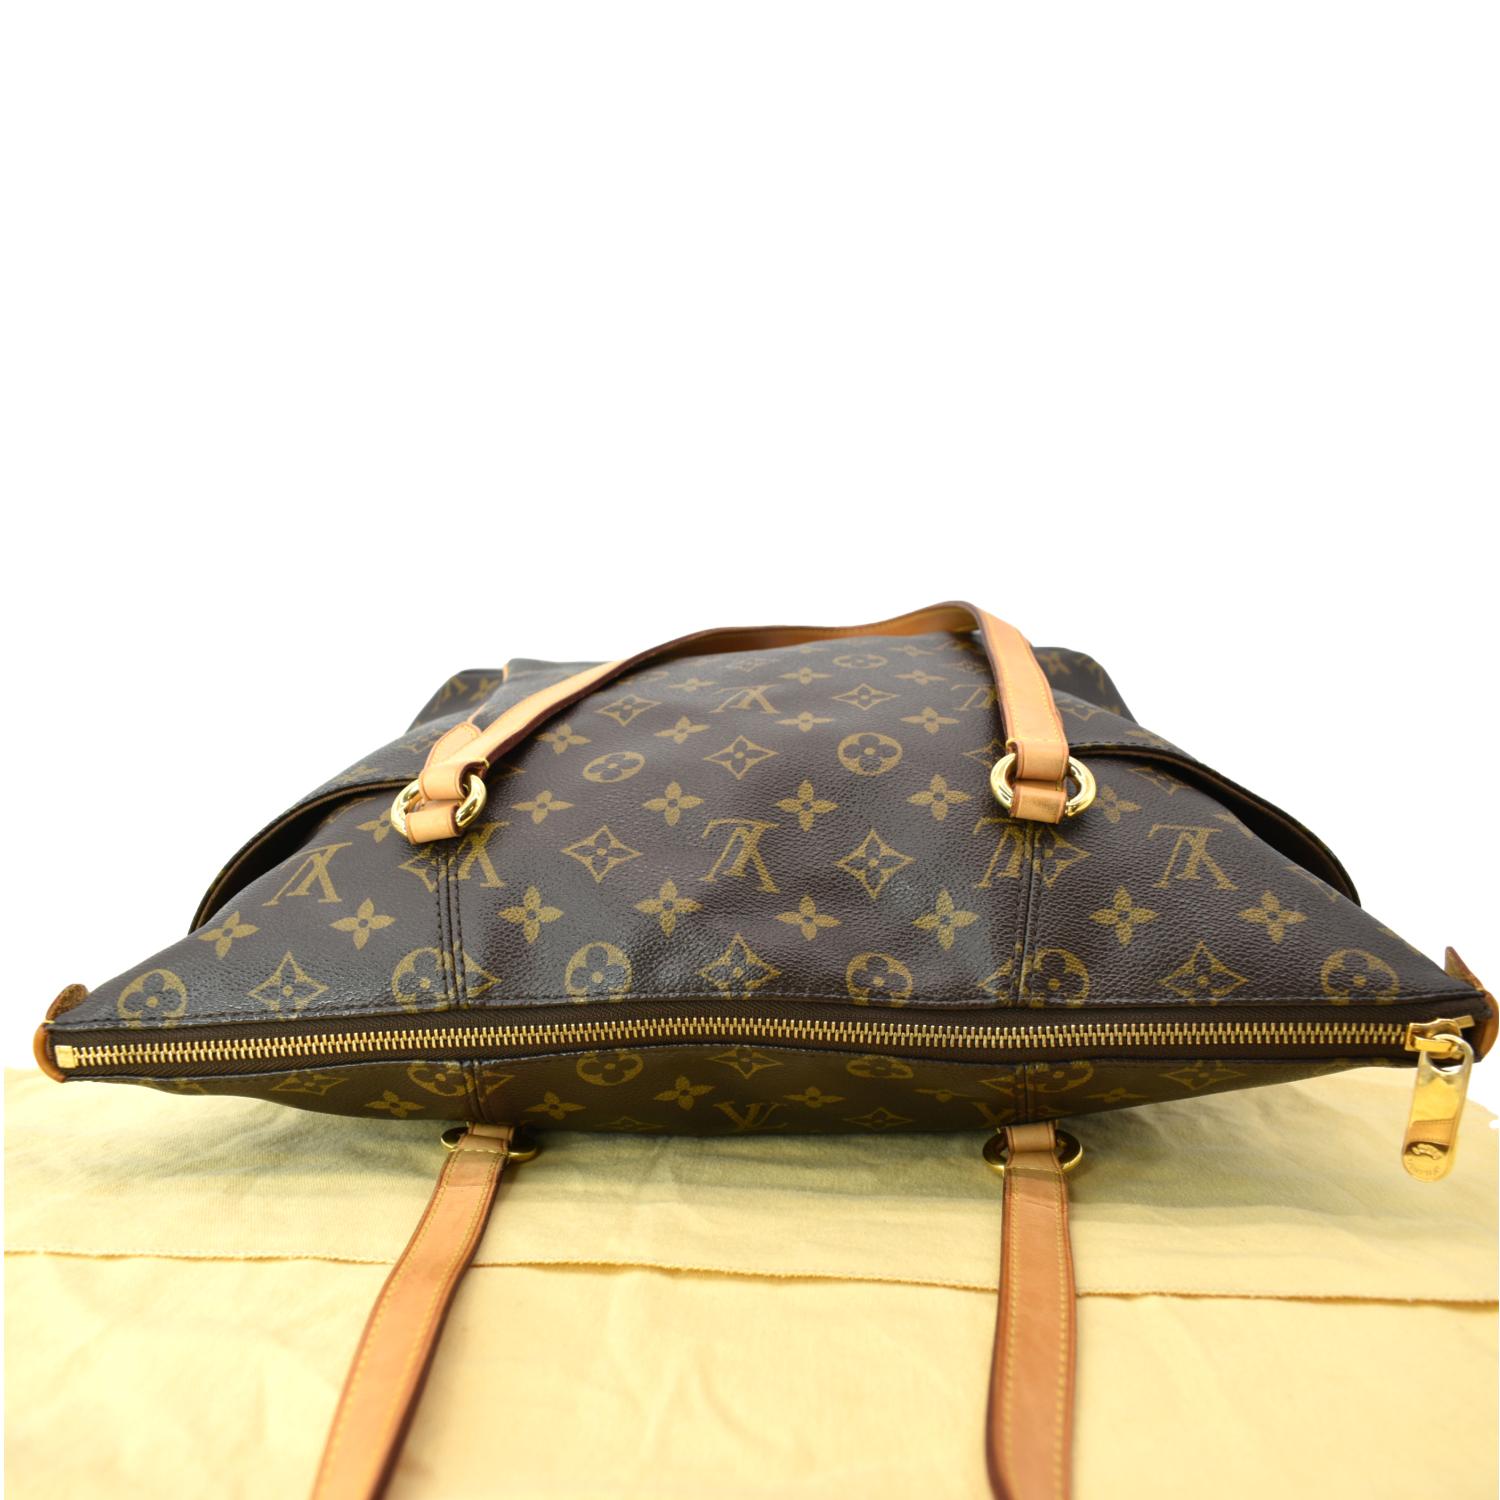 Louis Vuitton Pochette Dalmatian Shoulder Bag Small Black,Brown,White